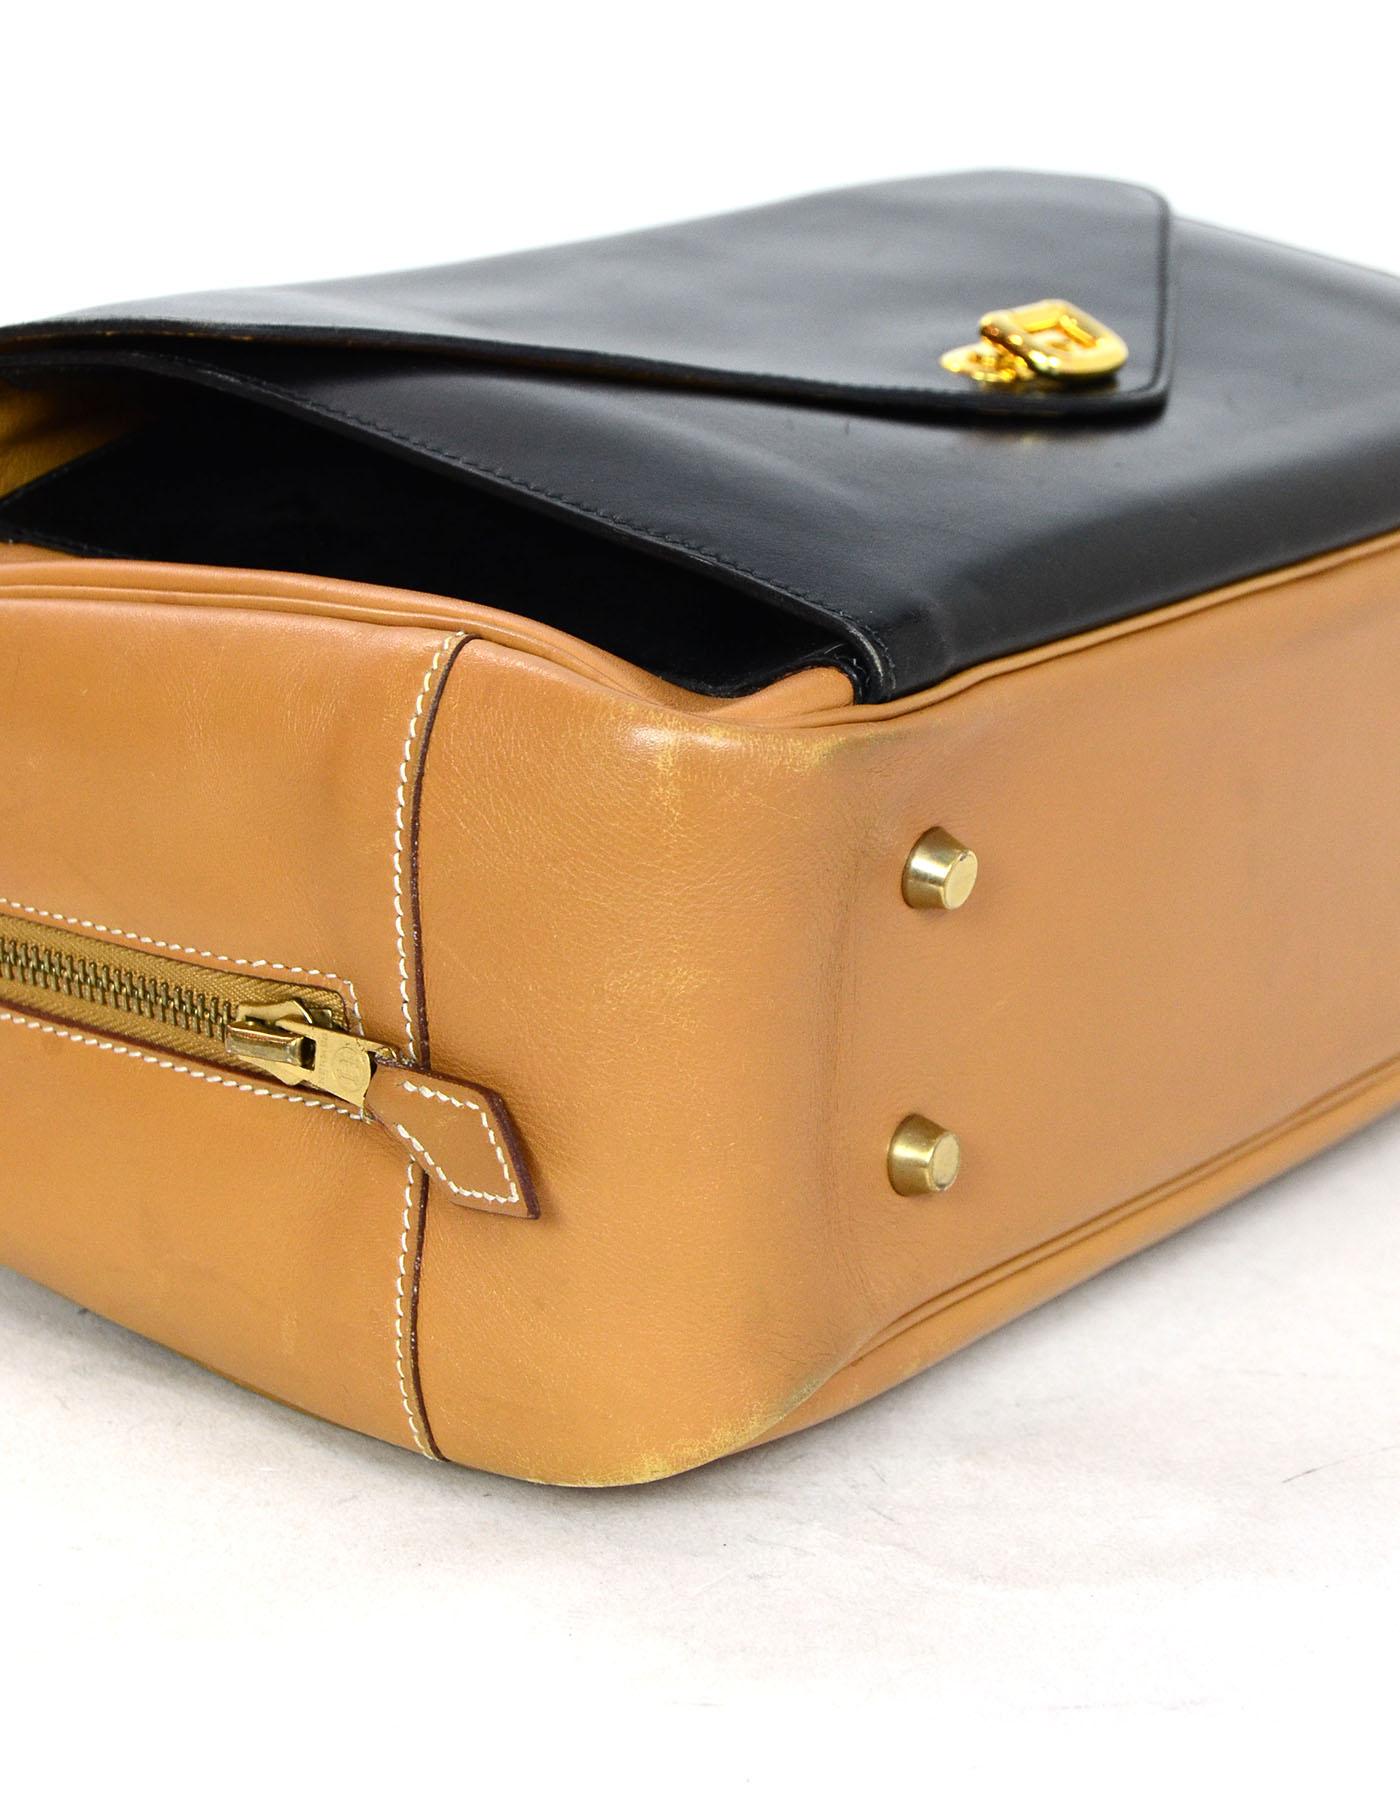 Hermes Vintage Tan & Black Top Handle Leather Handbag 1